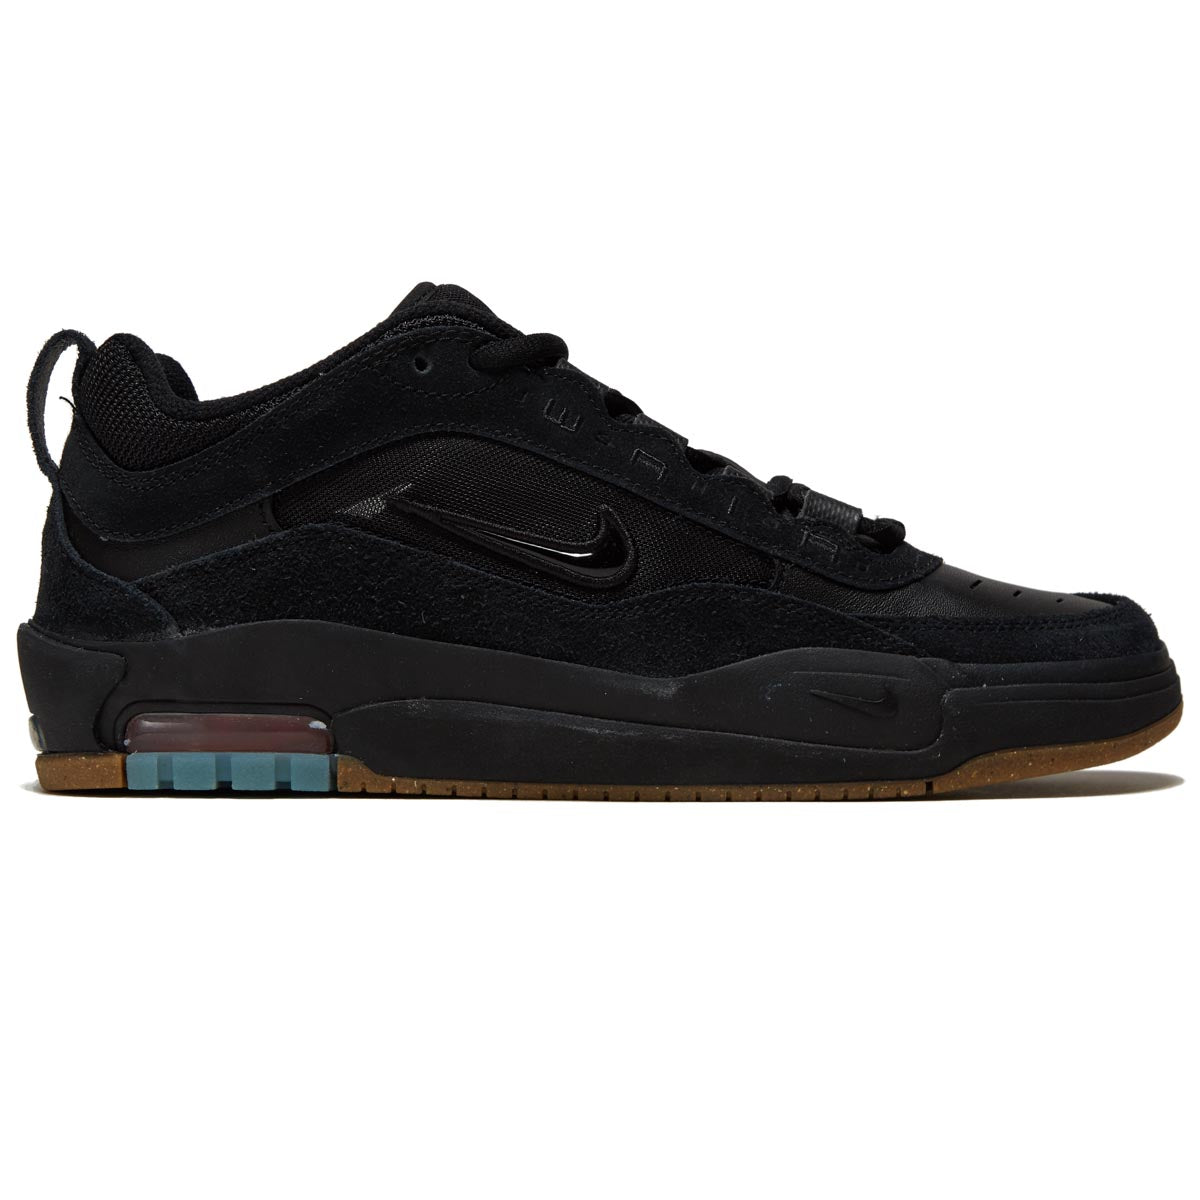 Nike SB Air Max Ishod Shoes - Black/Black/Anthracite/Black image 1